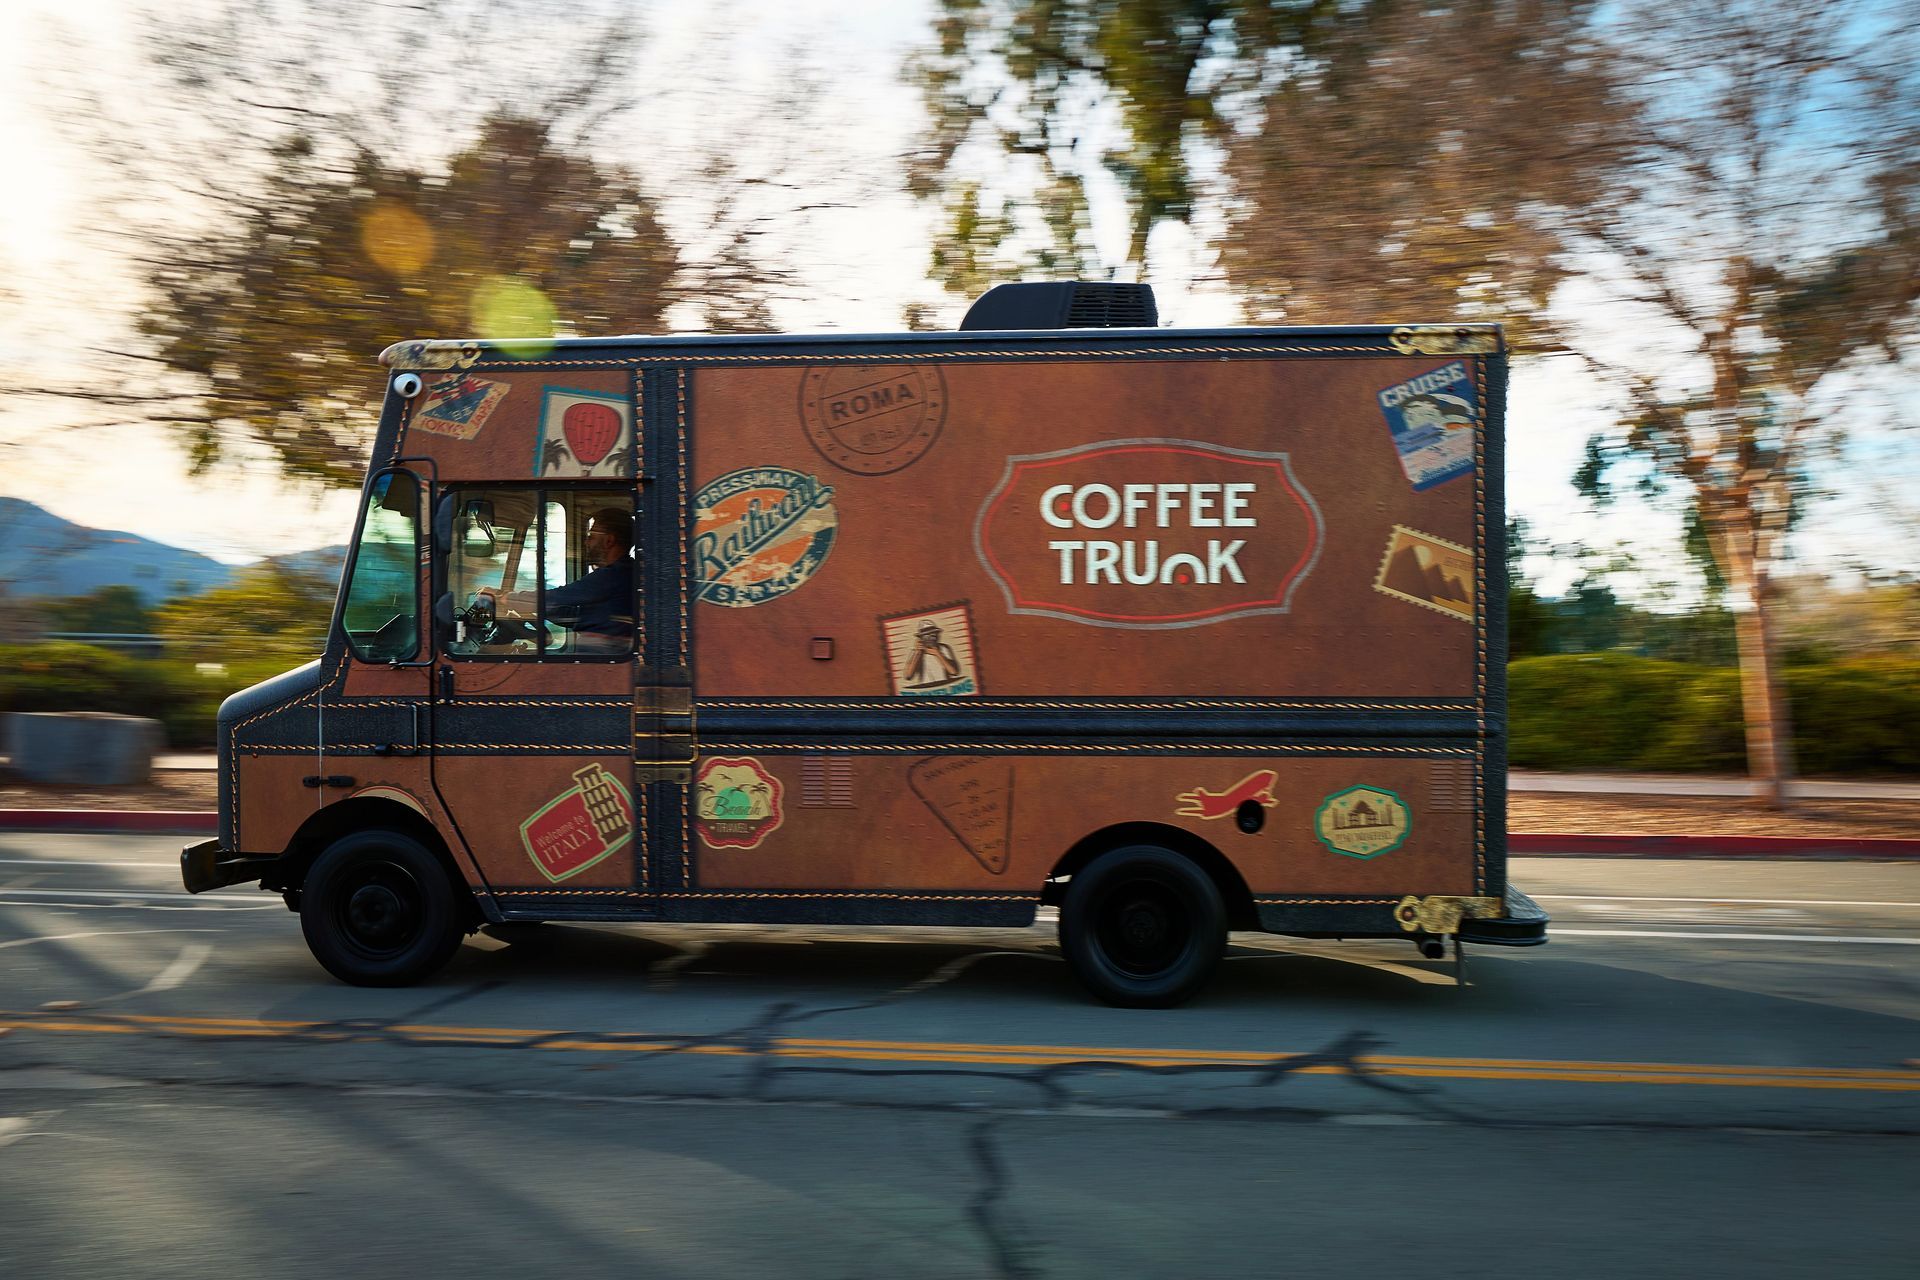 Sleek Coffee Trunk truck spotted on a scenic coastal road